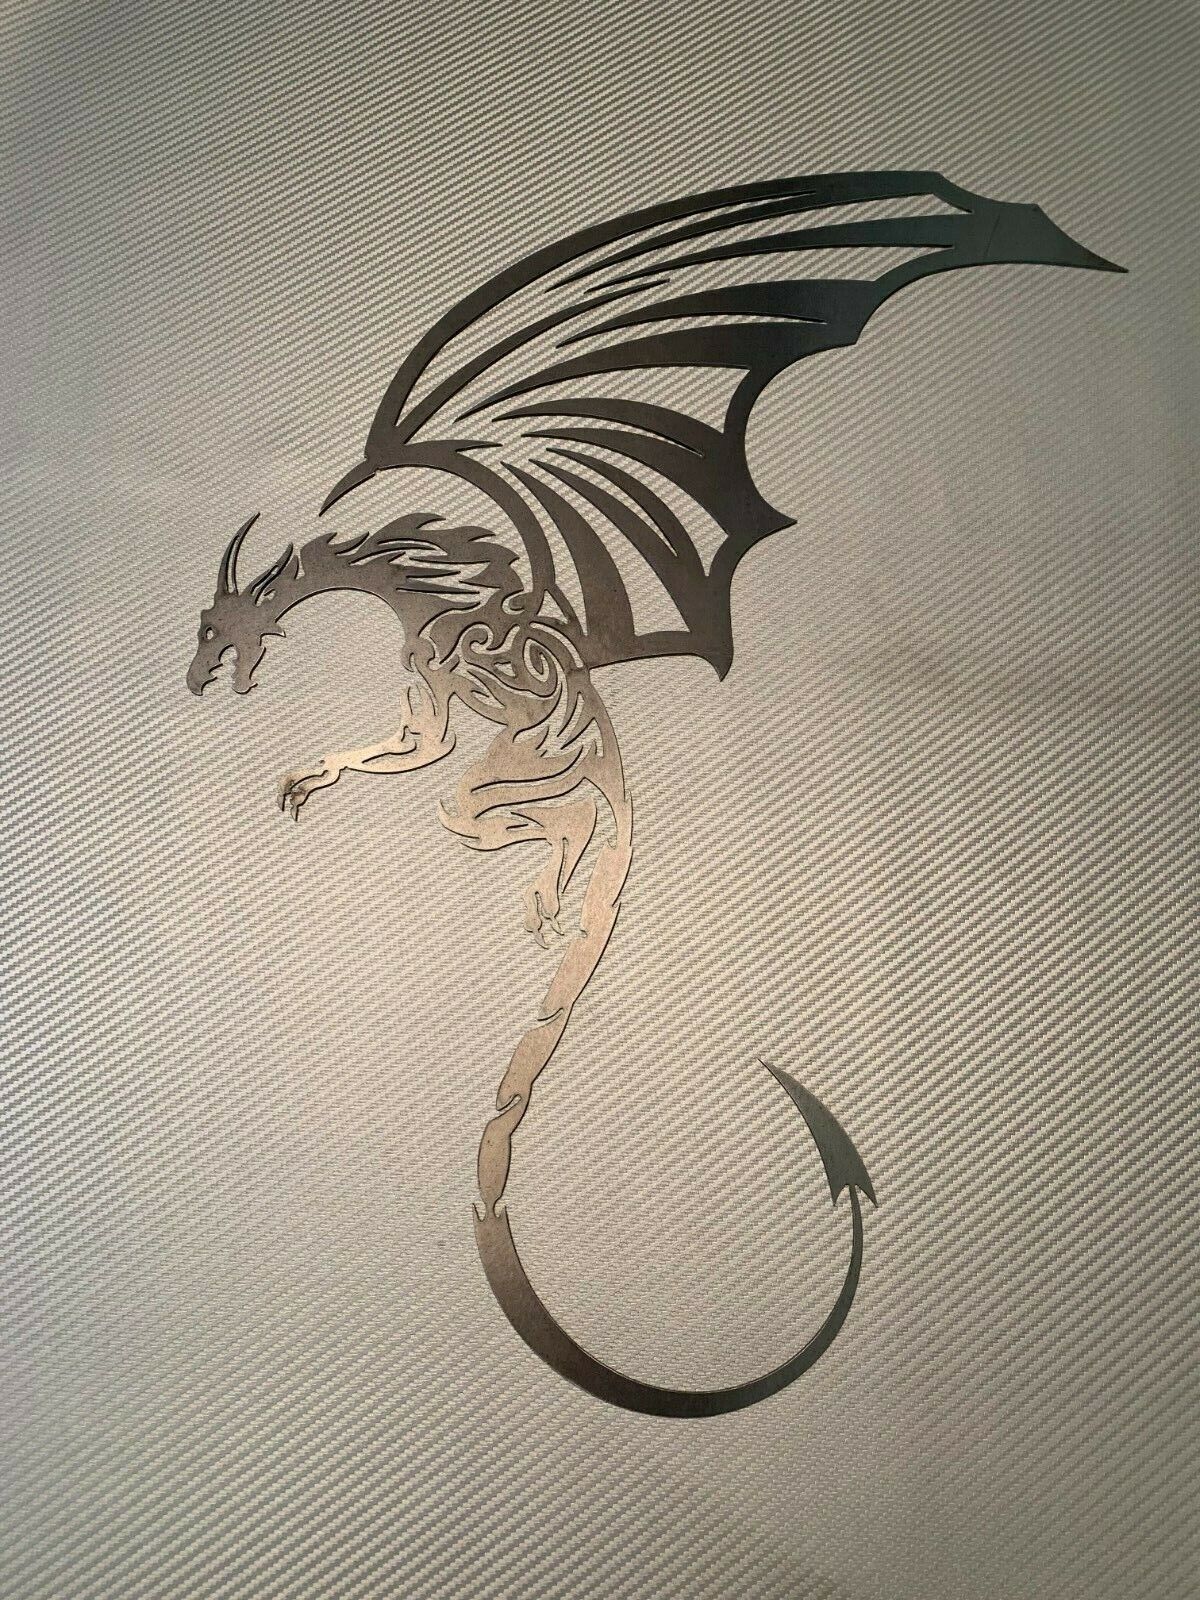 Medieval Tribal Dragon Metal Wall Art Decor Fantasy Plasma Cut Out